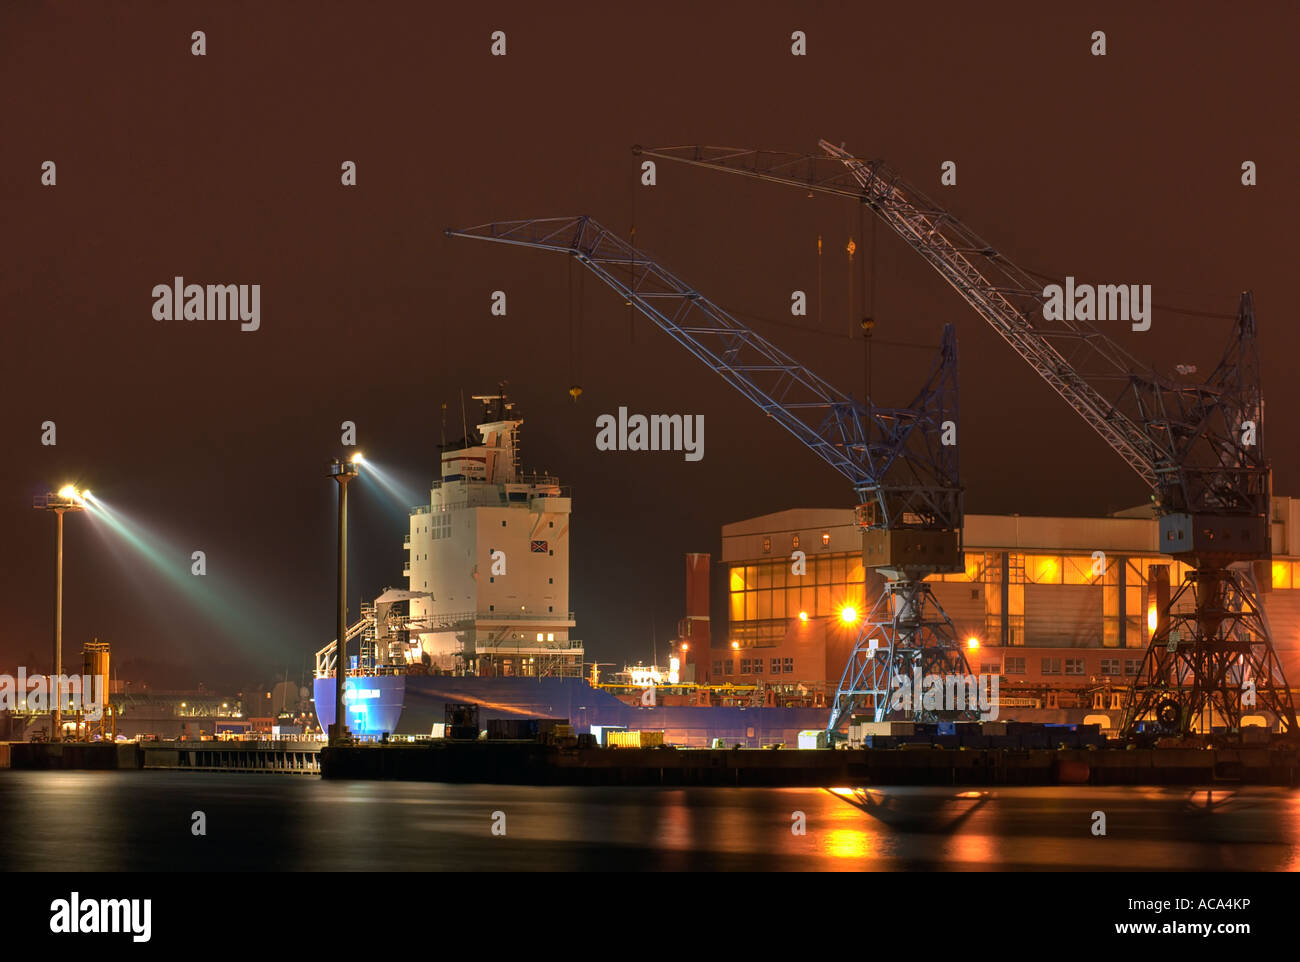 Howaldtswerke-Deutsche Werft (HDW), società di costruzione navale, di notte, Kiel, Schleswig-Holstein, Germania Foto Stock